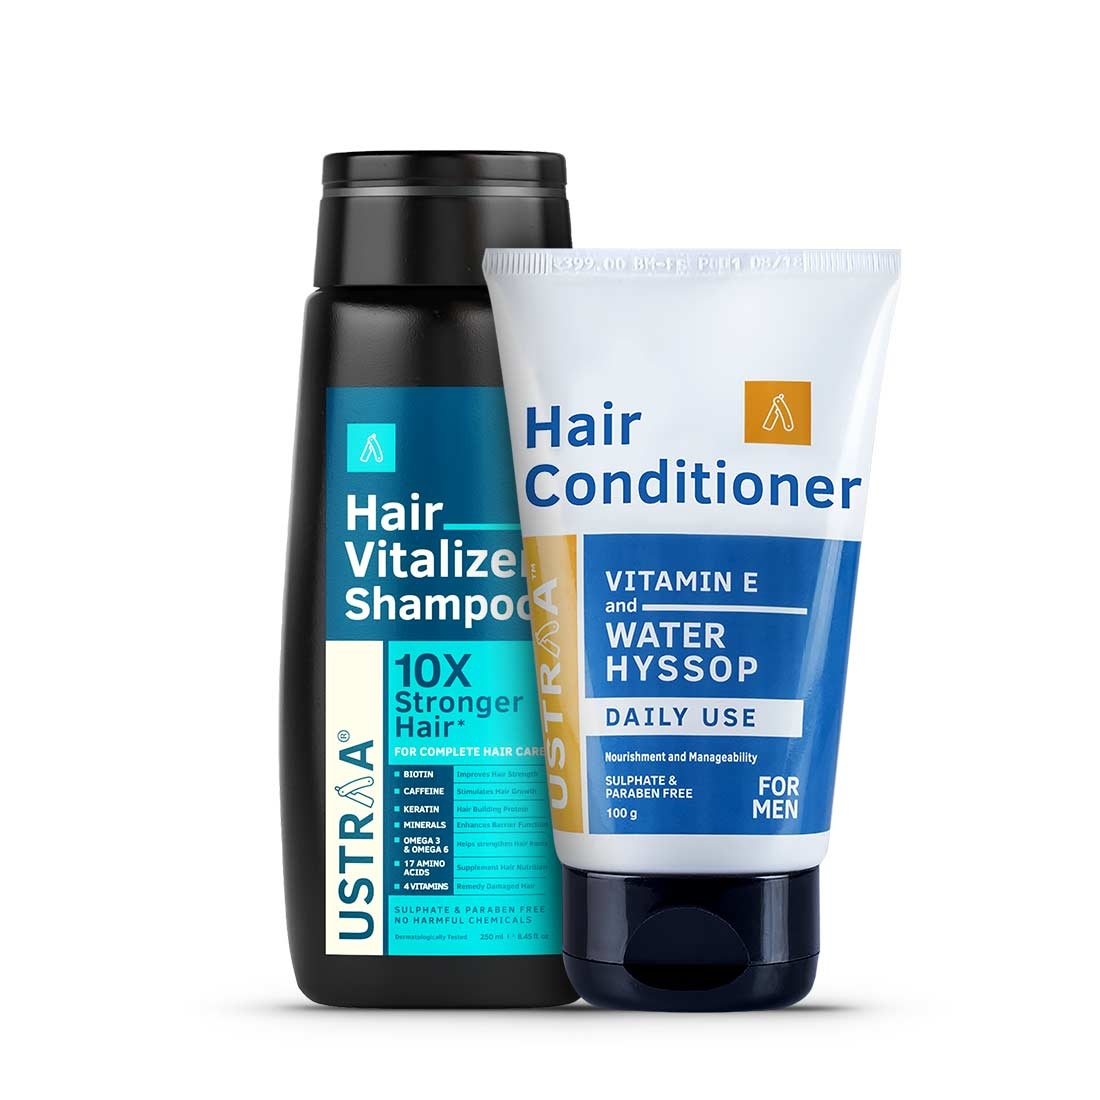 Ustraa | Ustraa Hair Vitalizer Shampoo - 250ml & Daily-Use Hair Conditioner - 100g